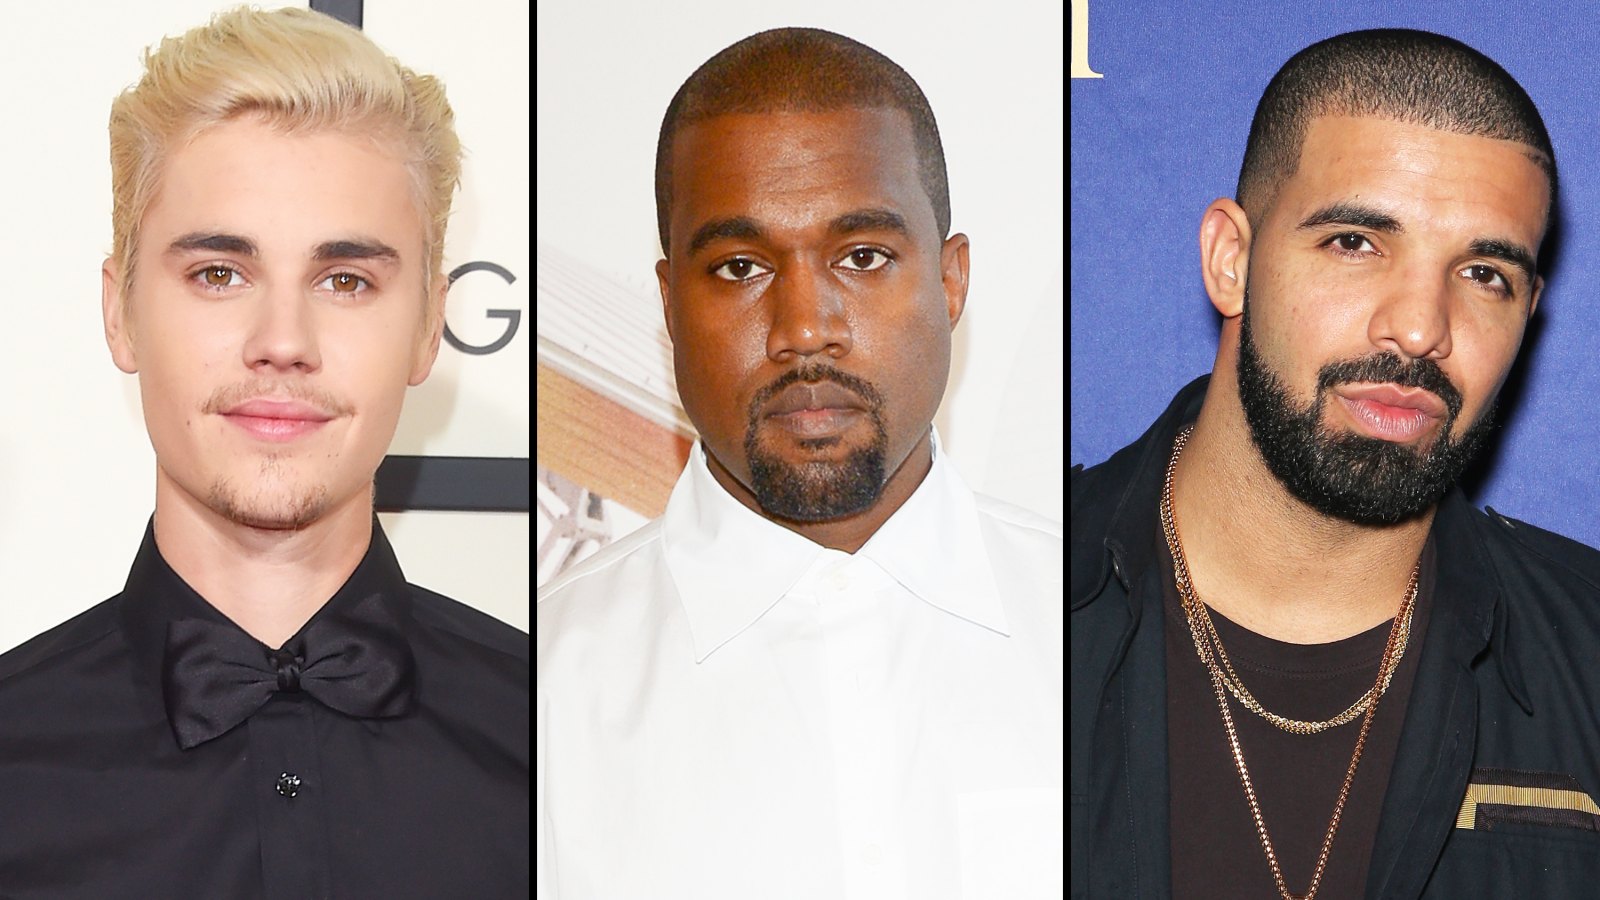 Justin Bieber, Kanye West and Drake